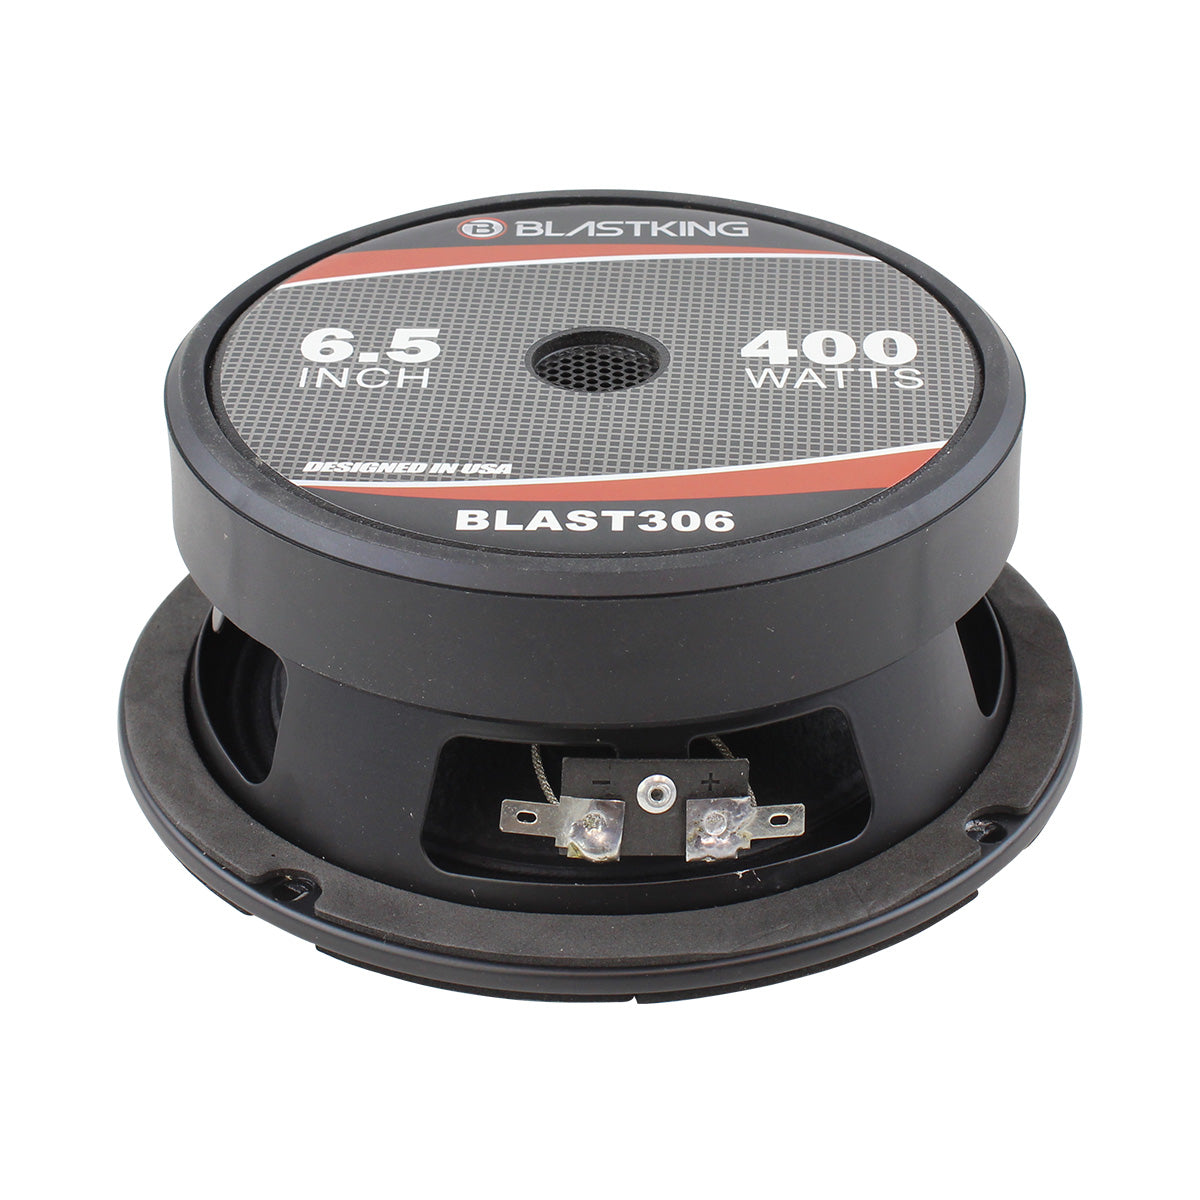 6.5 inch 400 Watts Midbass Loudspeaker - BLAST306